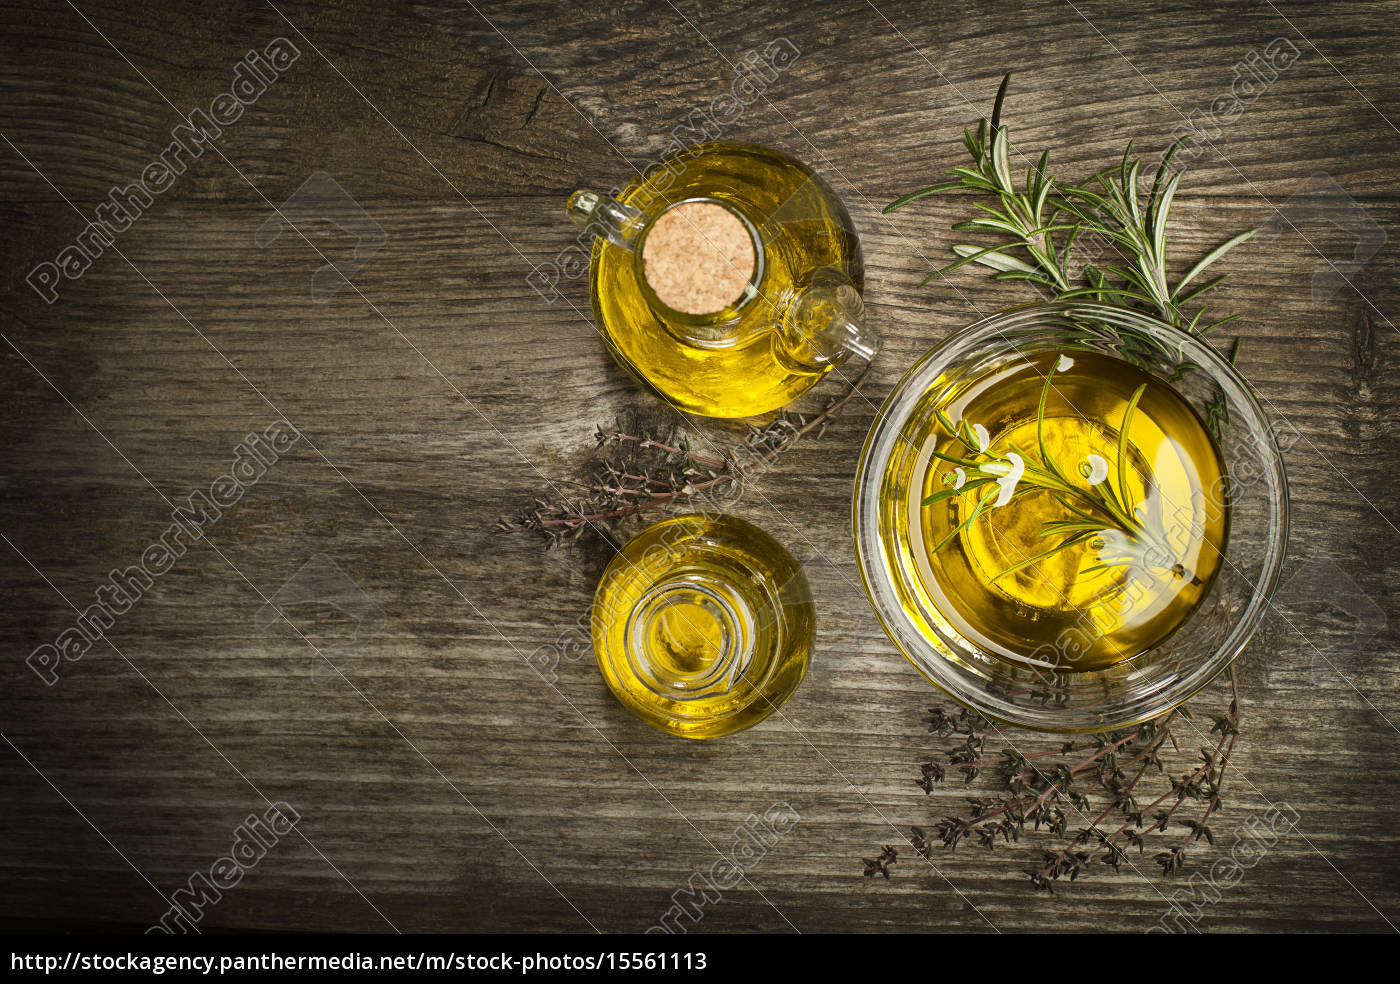 olivenöl mit kräutern - Lizenzfreies Bild - #15561113 | Bildagentur ...